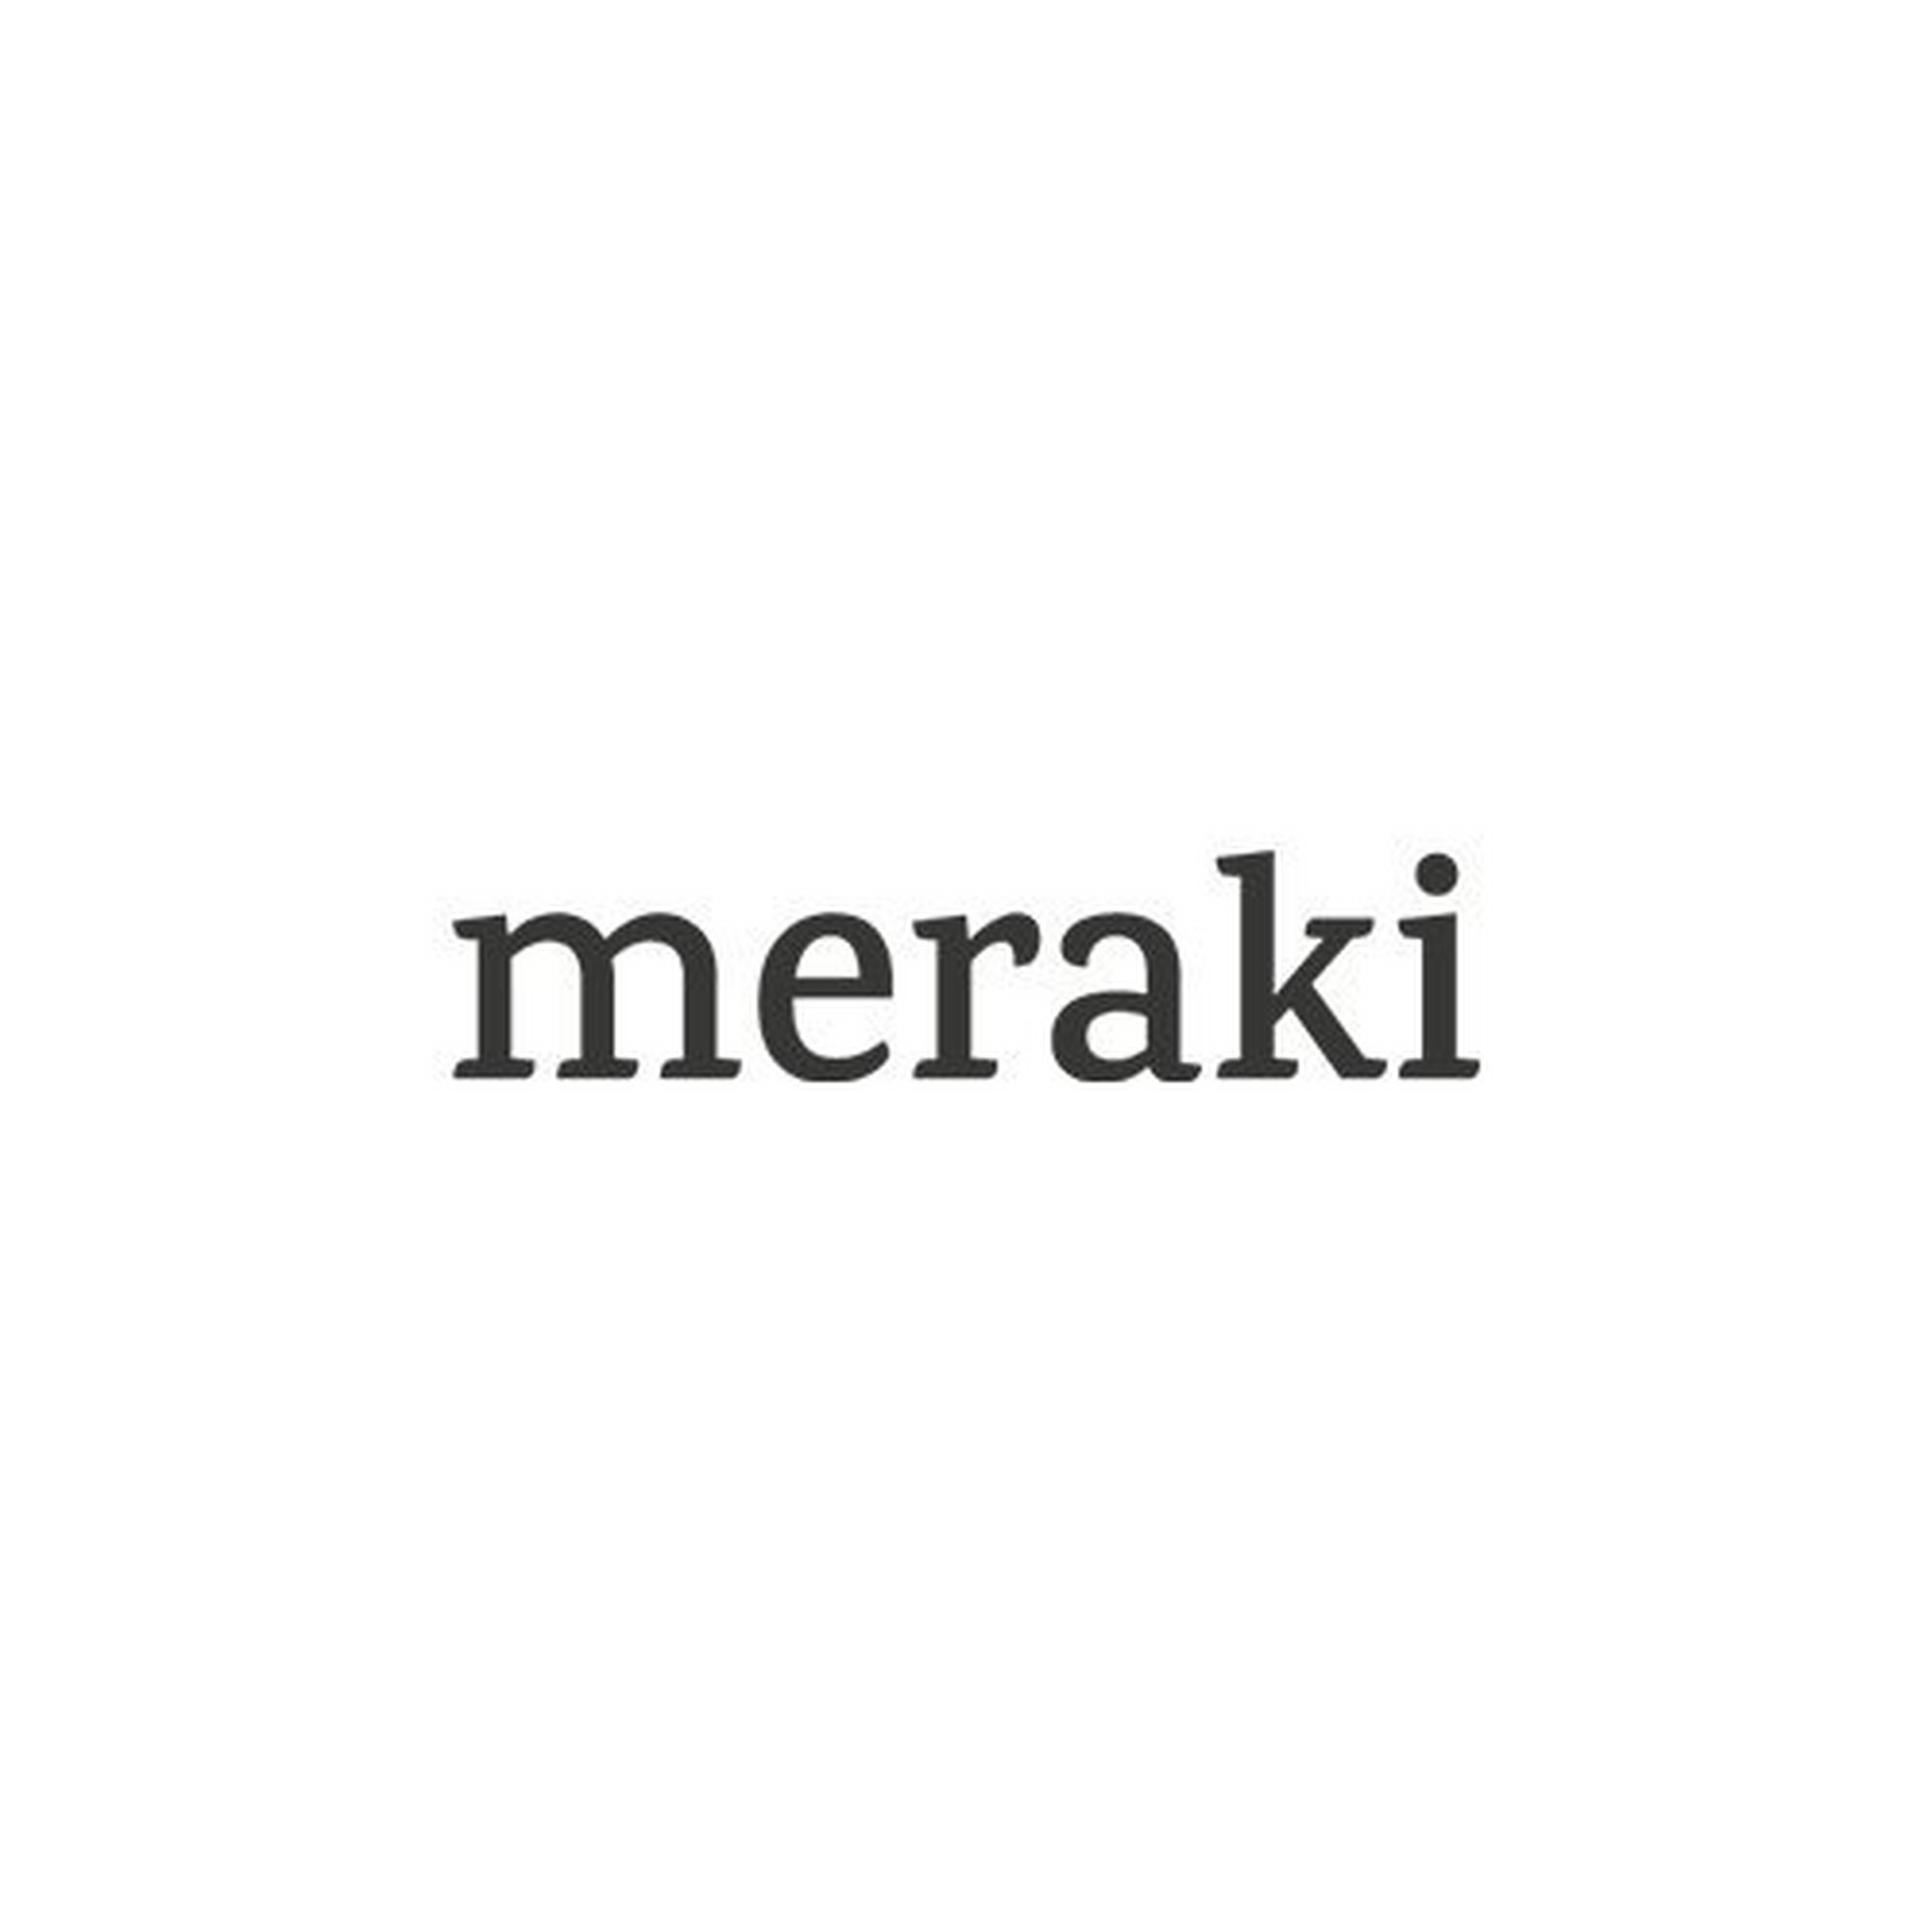 Meraki logotype